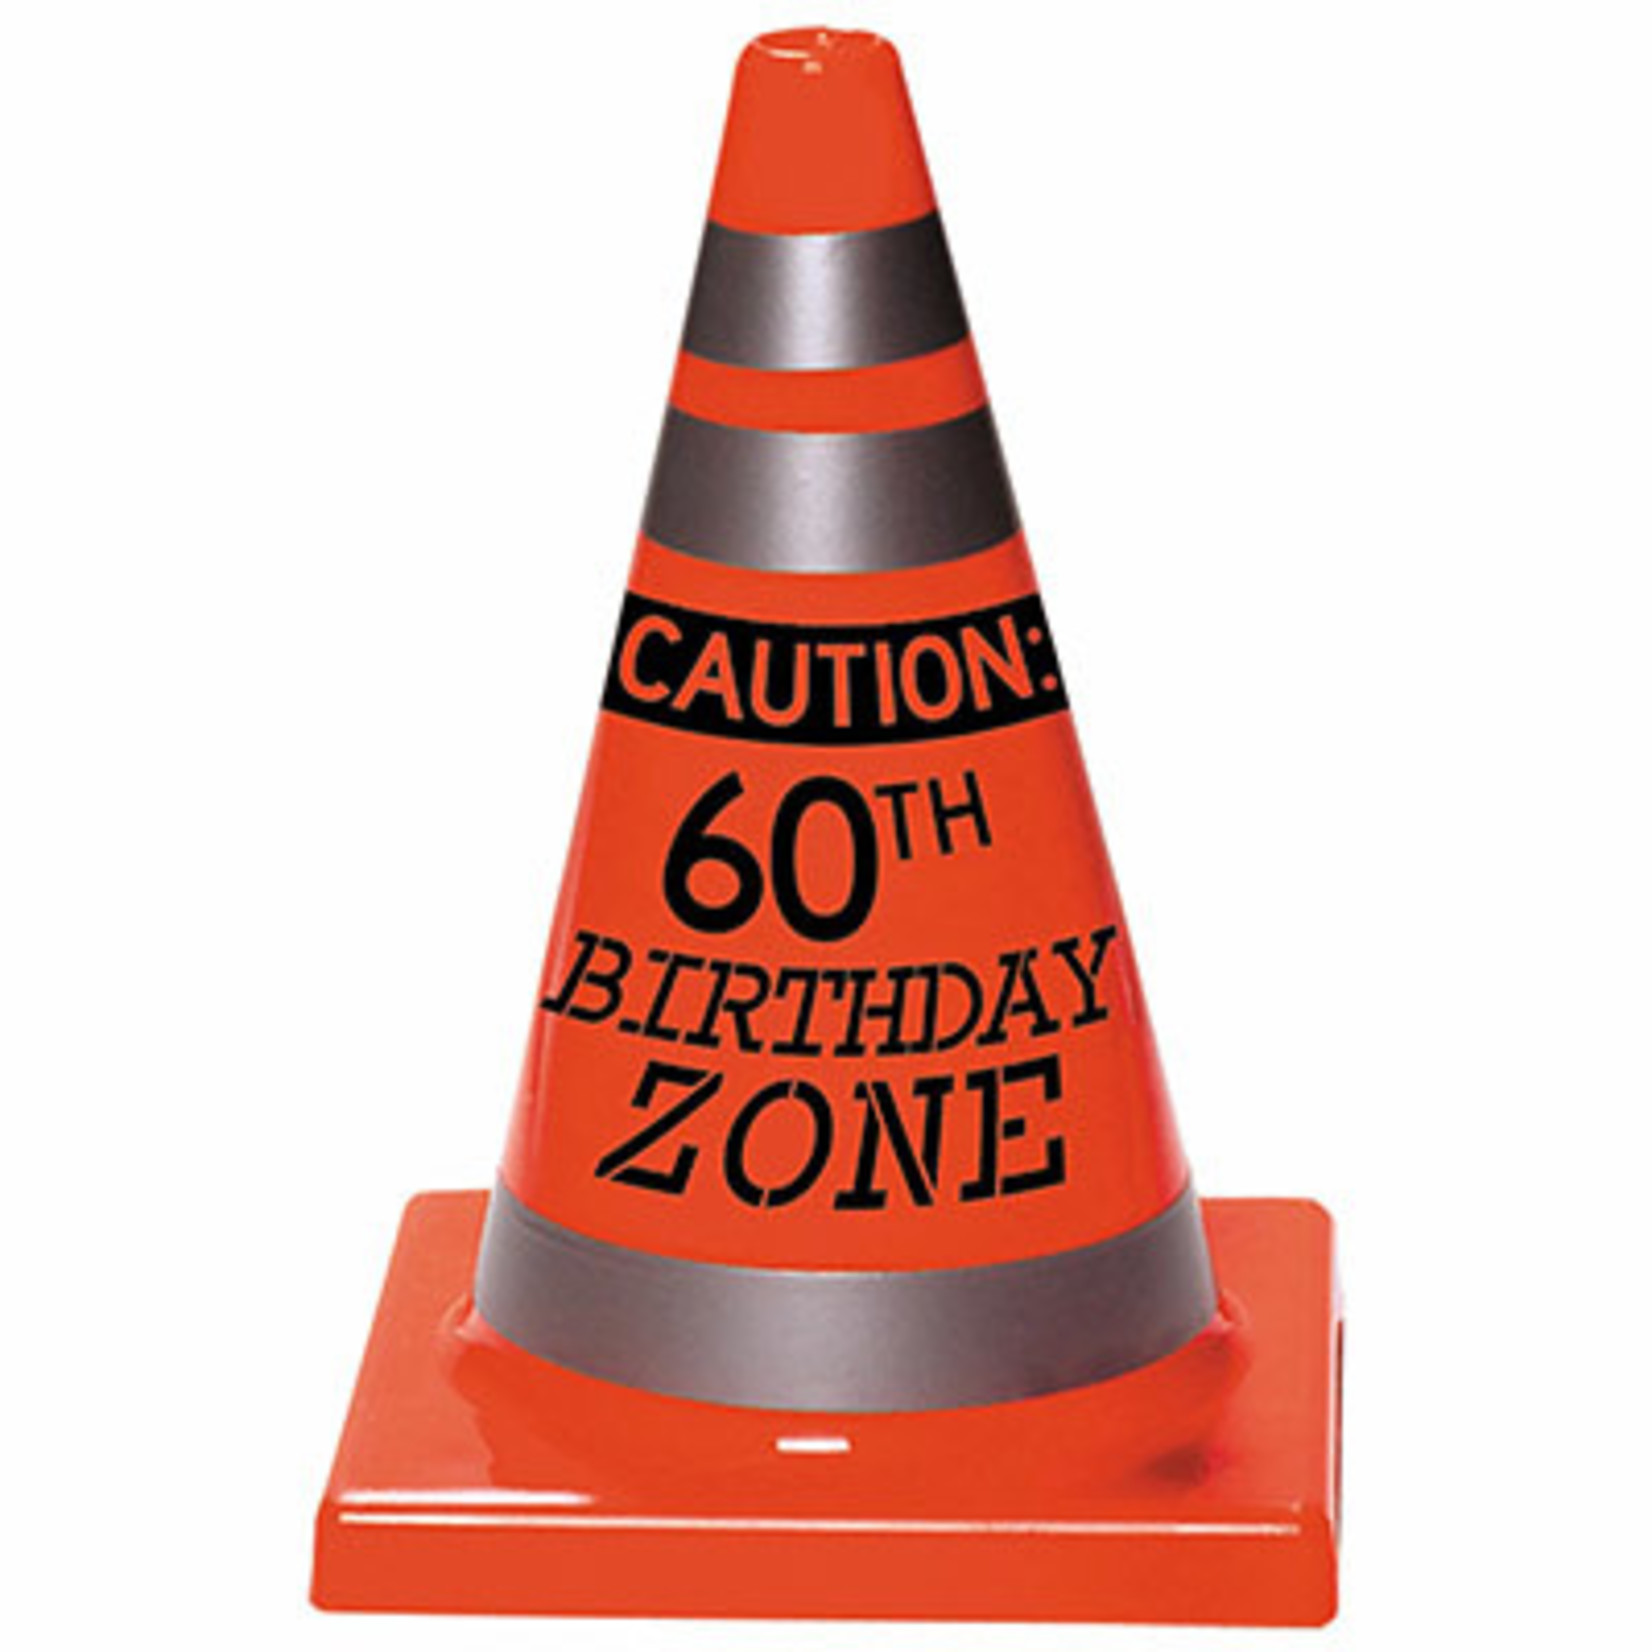 Amscan Caution 60th Birthday Zone Cone - 1ct.